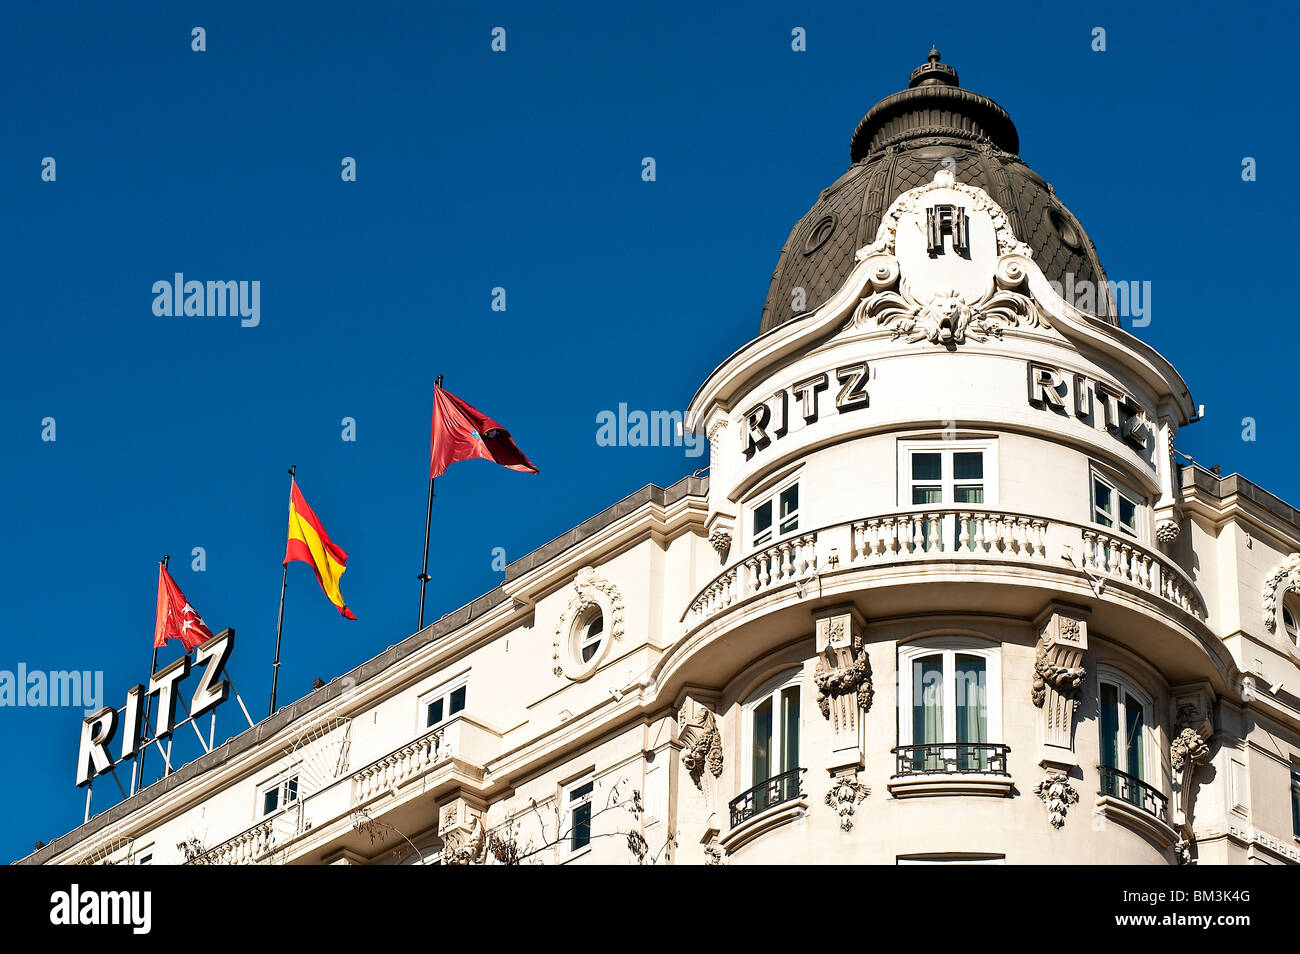 Ritz Hotel, Madrid, Spain Stock Photo